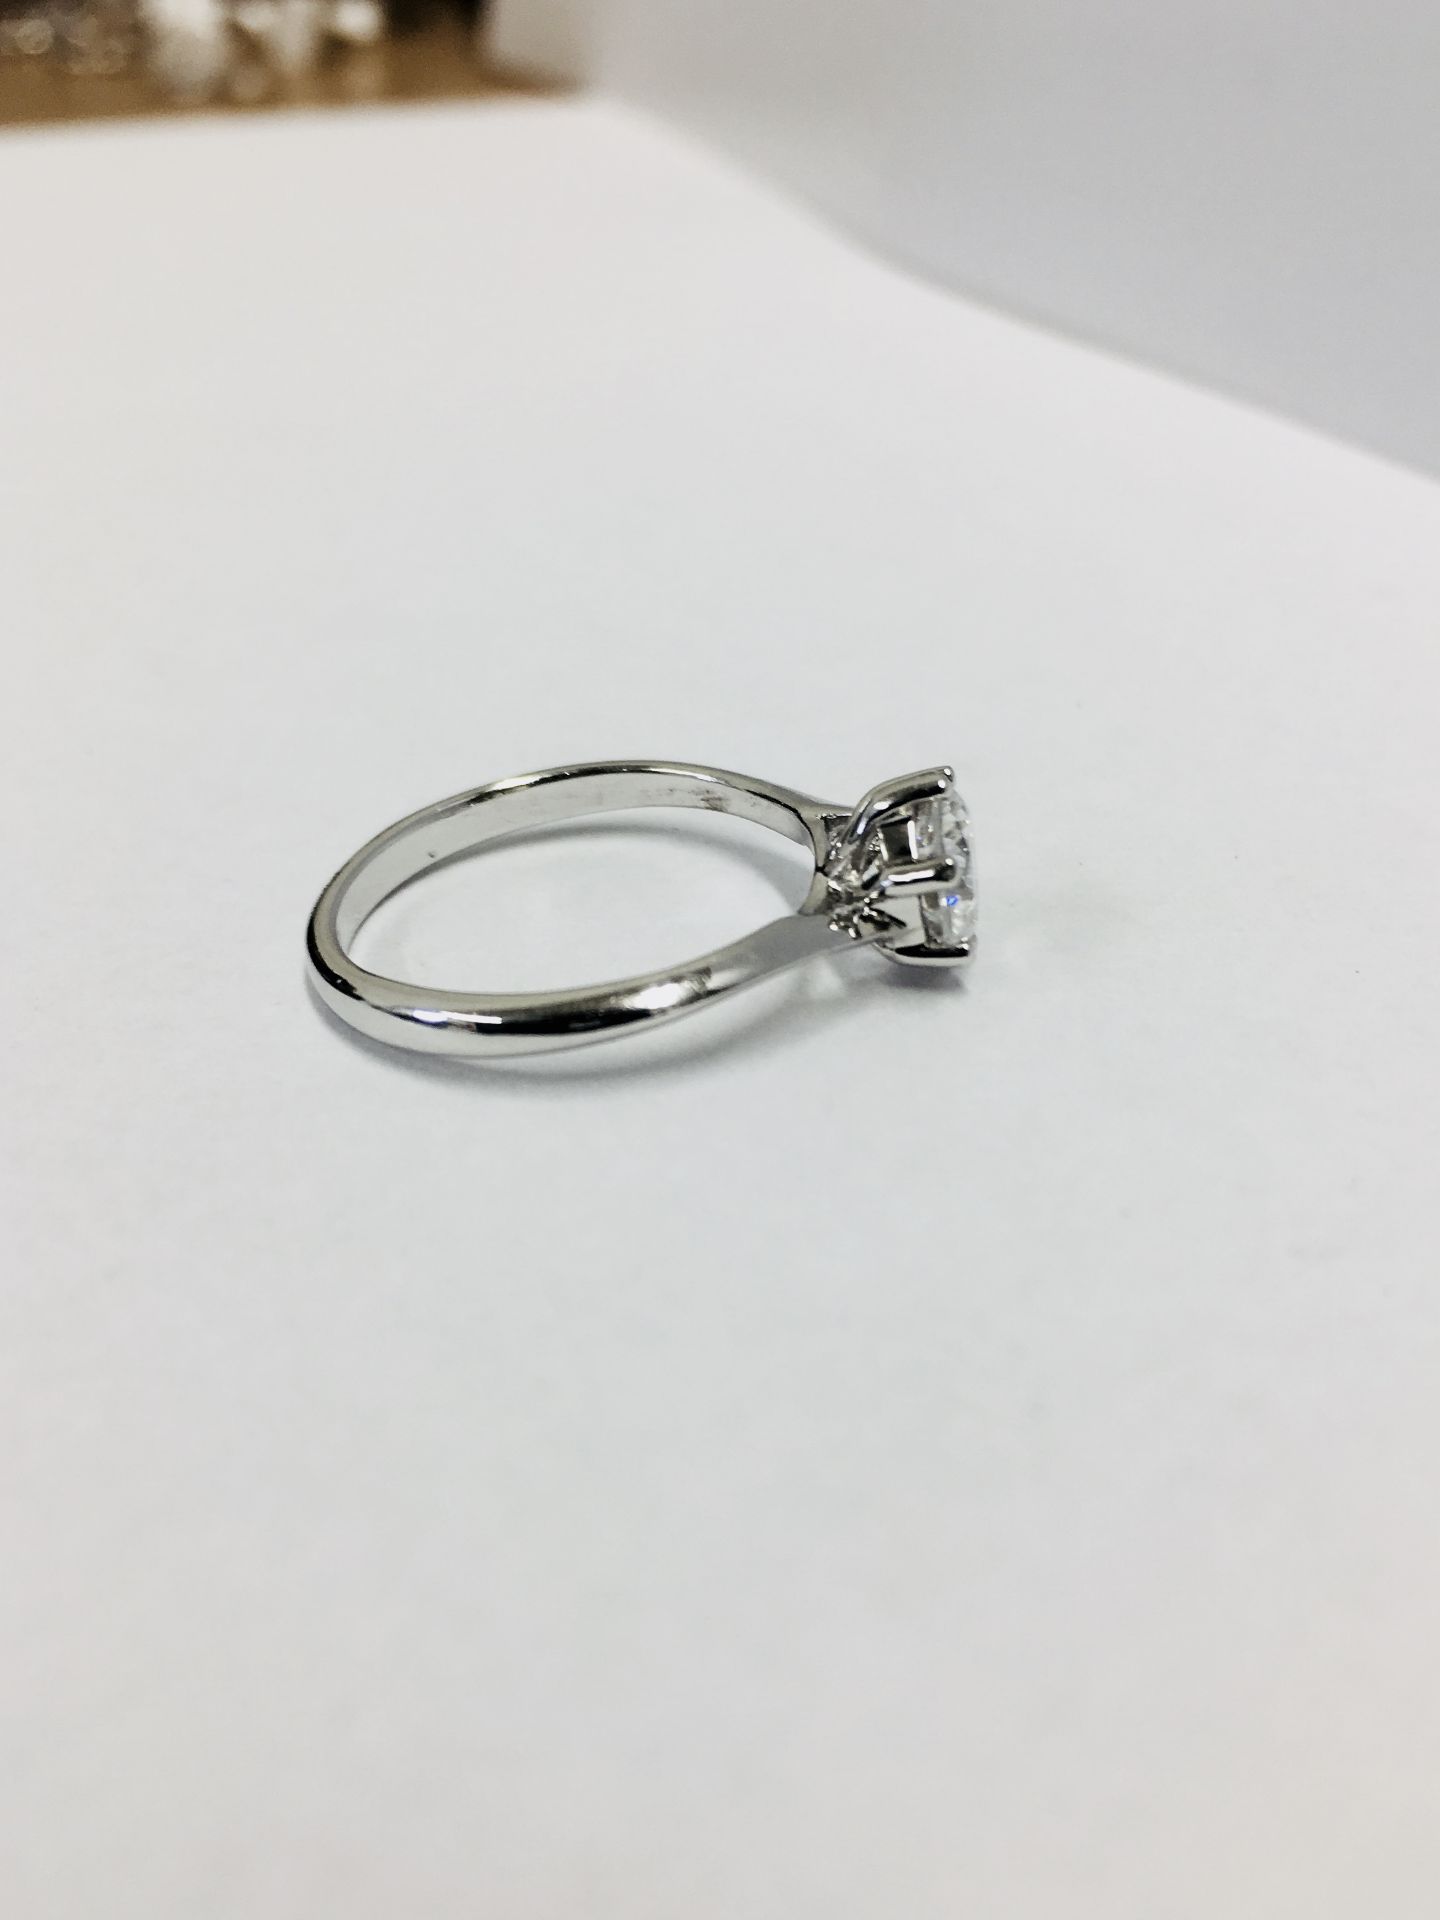 Platinum 6 claw twist diamond solitaire ring,0.50ct brilliant cut diamond D colour vs clarity,4.3gms - Image 7 of 7